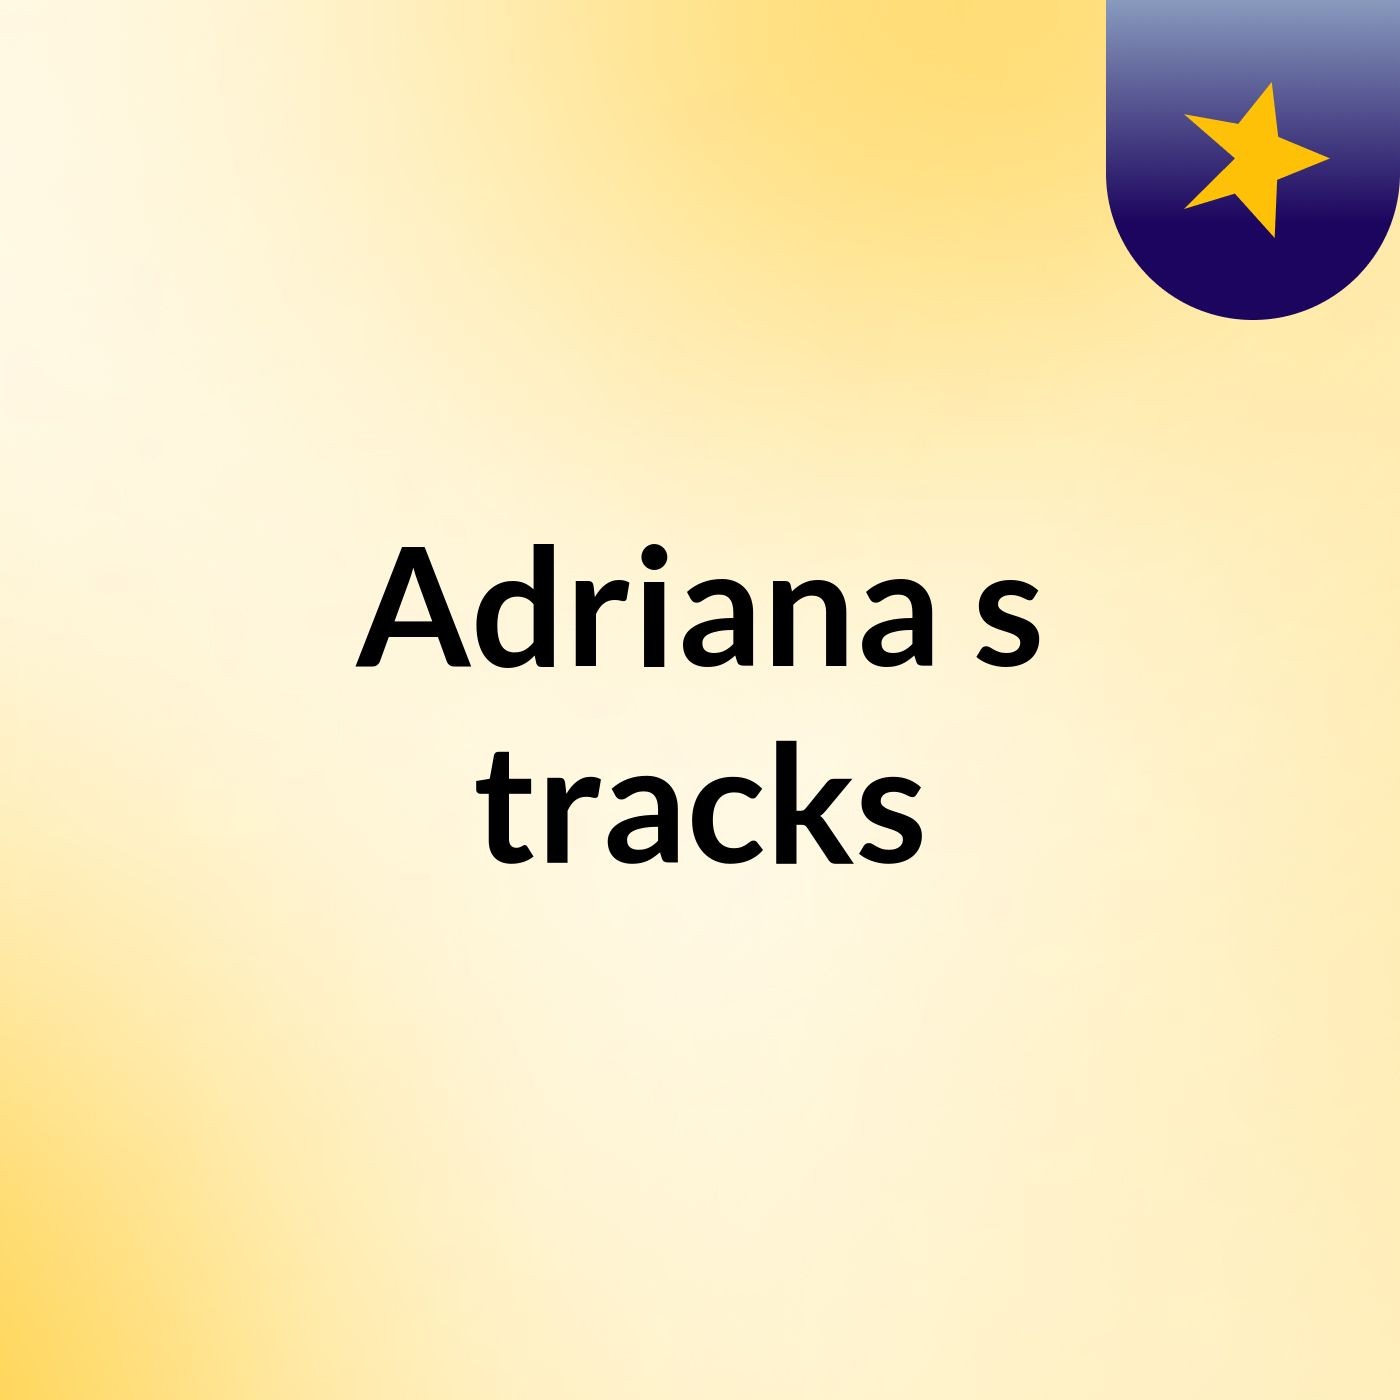 Adriana's tracks